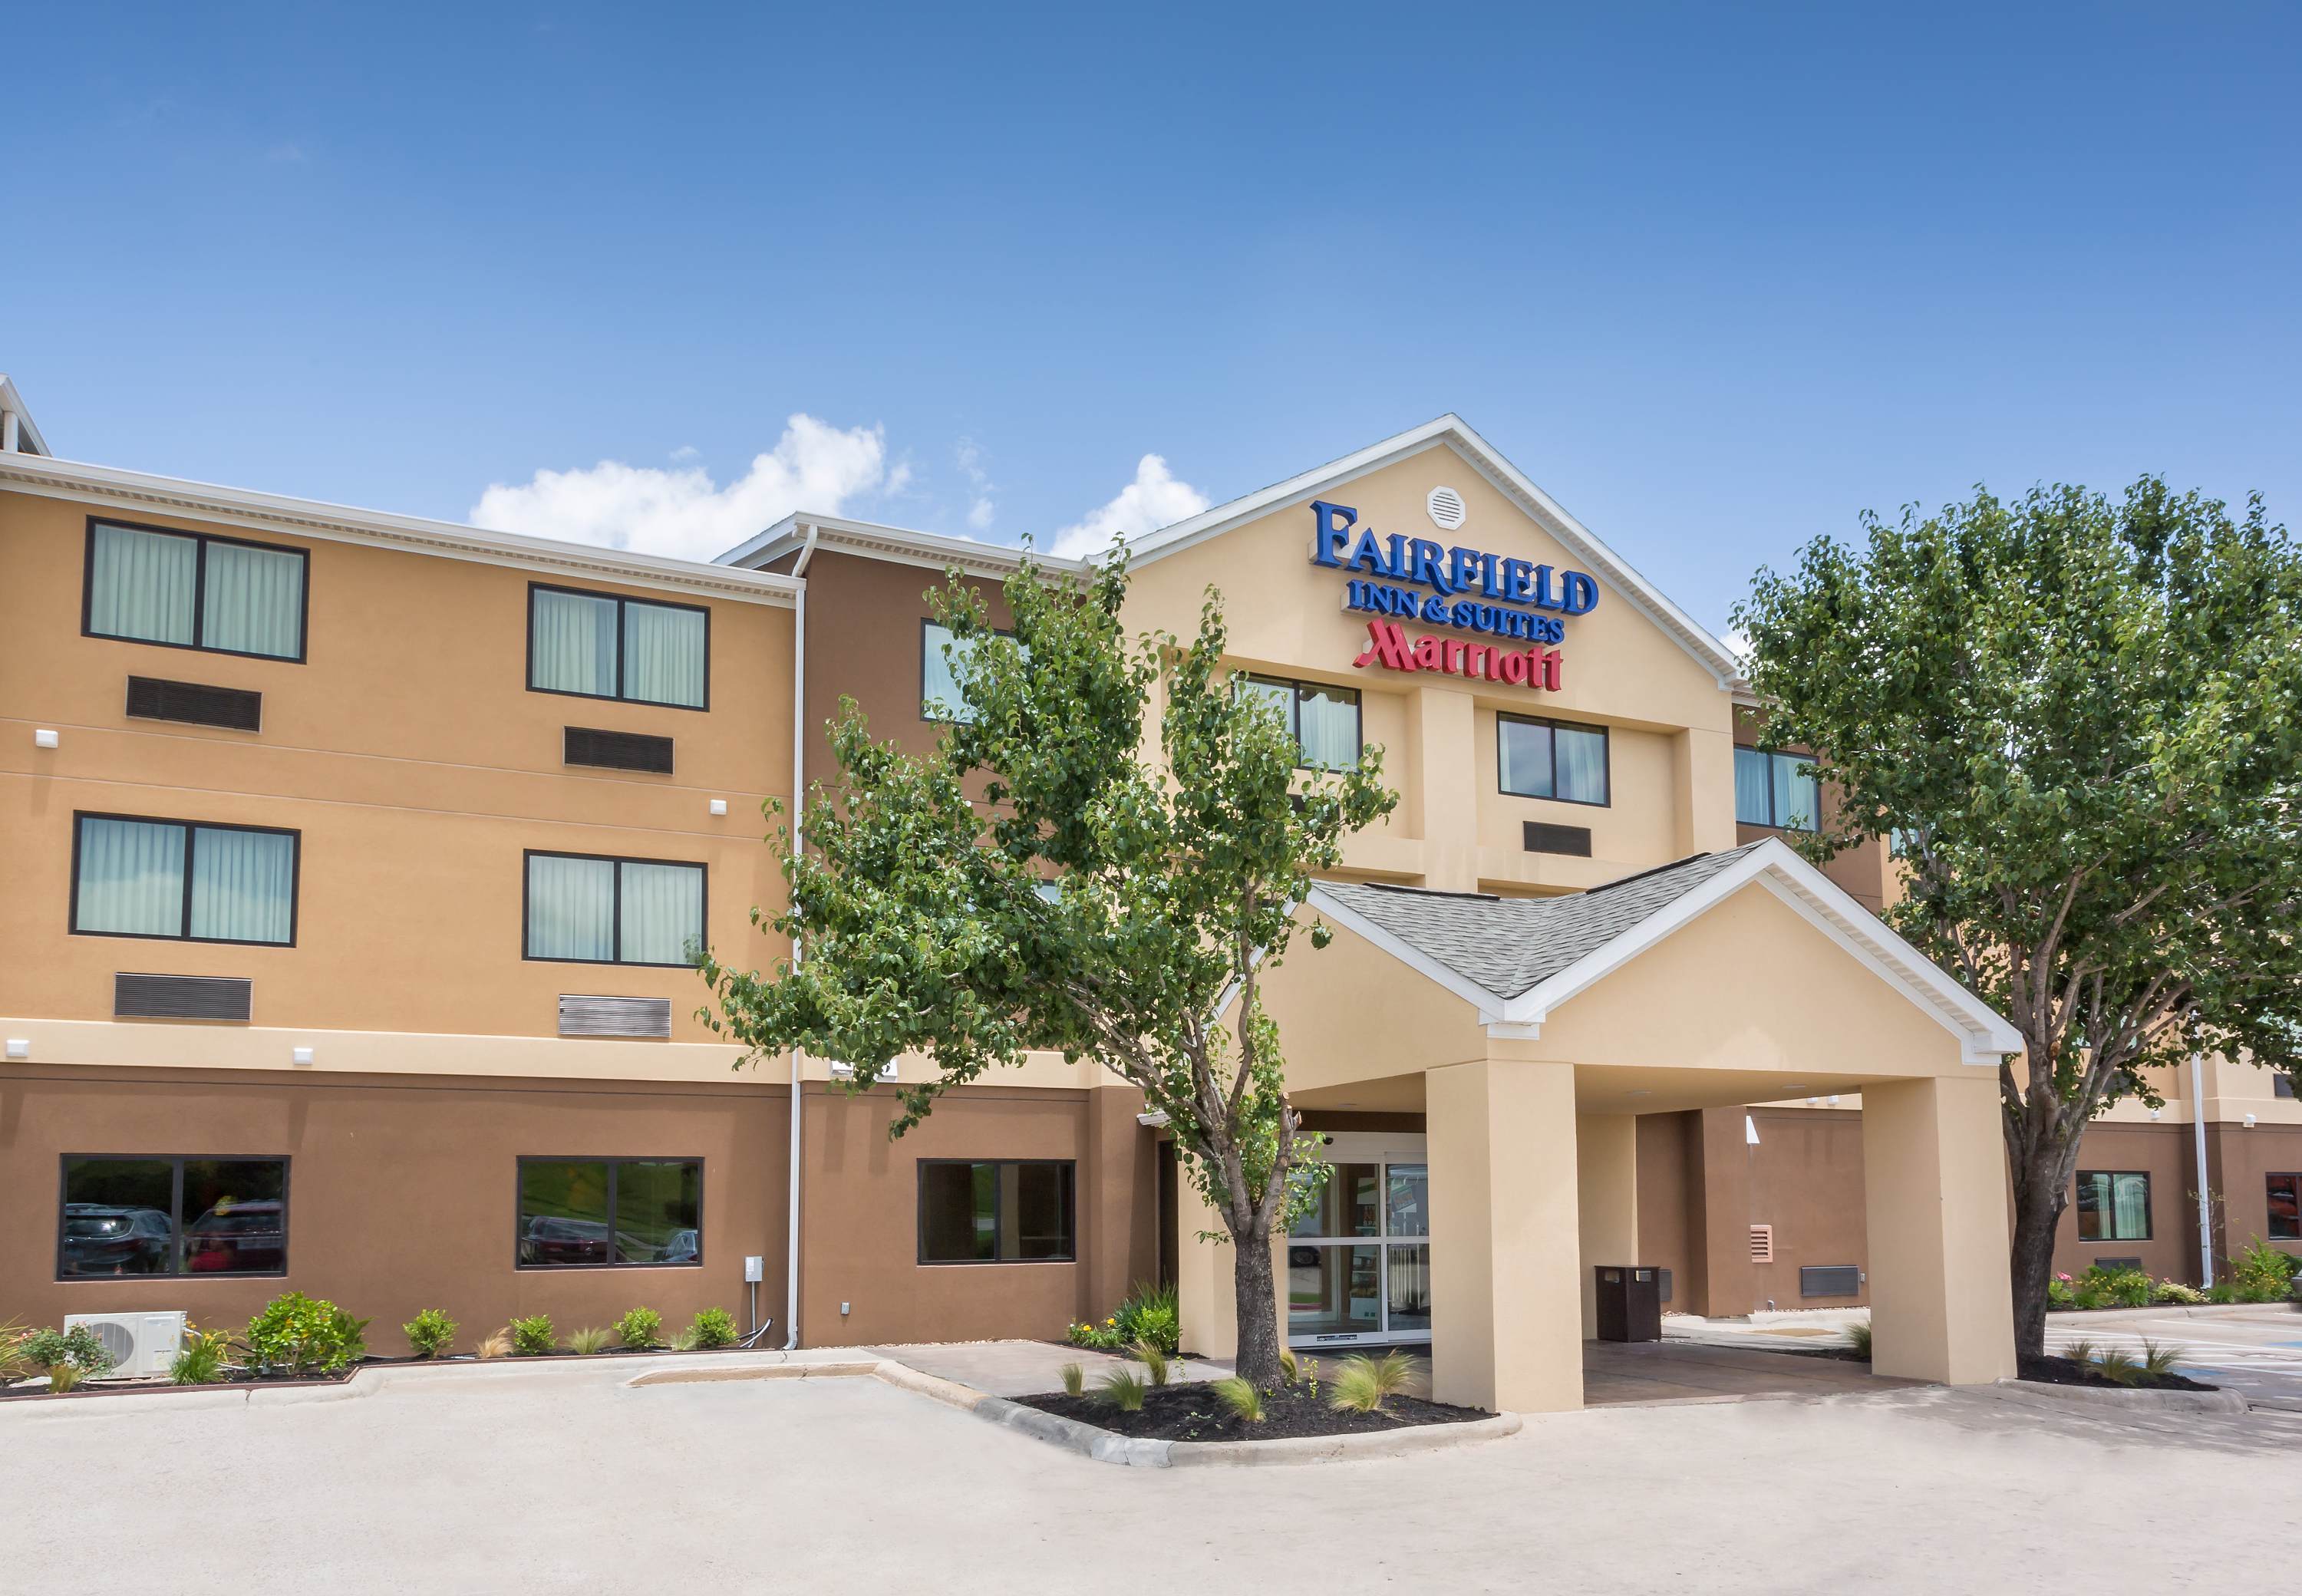 Photo of Fairfield Inn & Suites by Marriott Victoria, Victoria, TX